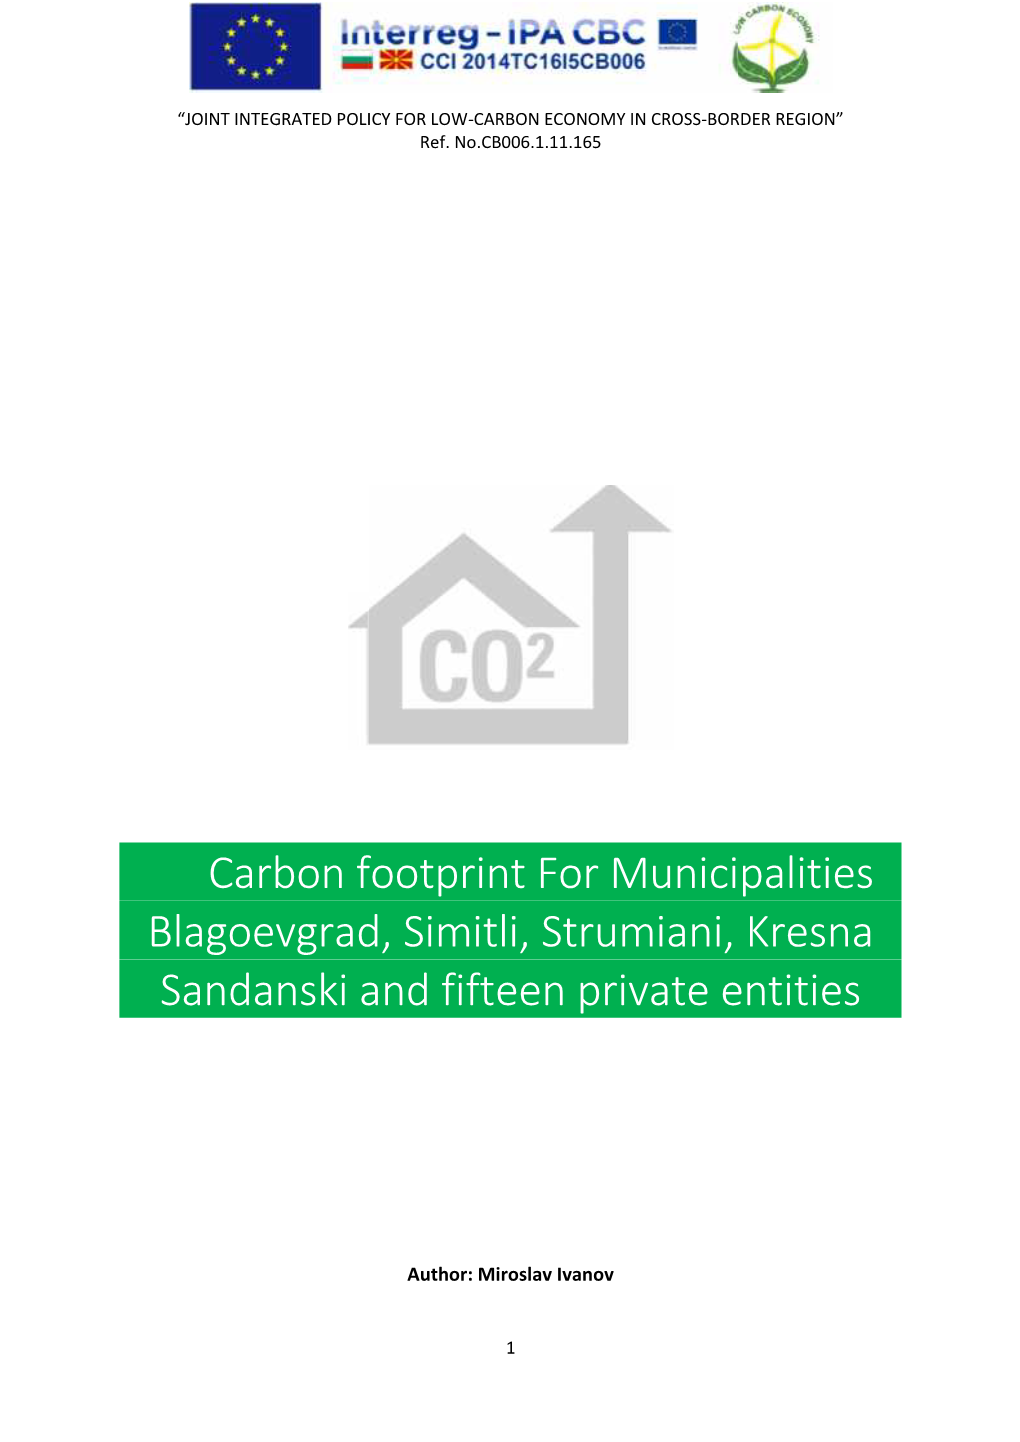 Carbon Footprint for Municipalities Blagoevgrad, Simitli, Strumiani, Kresna Sandanski and Fifteen Private Entities